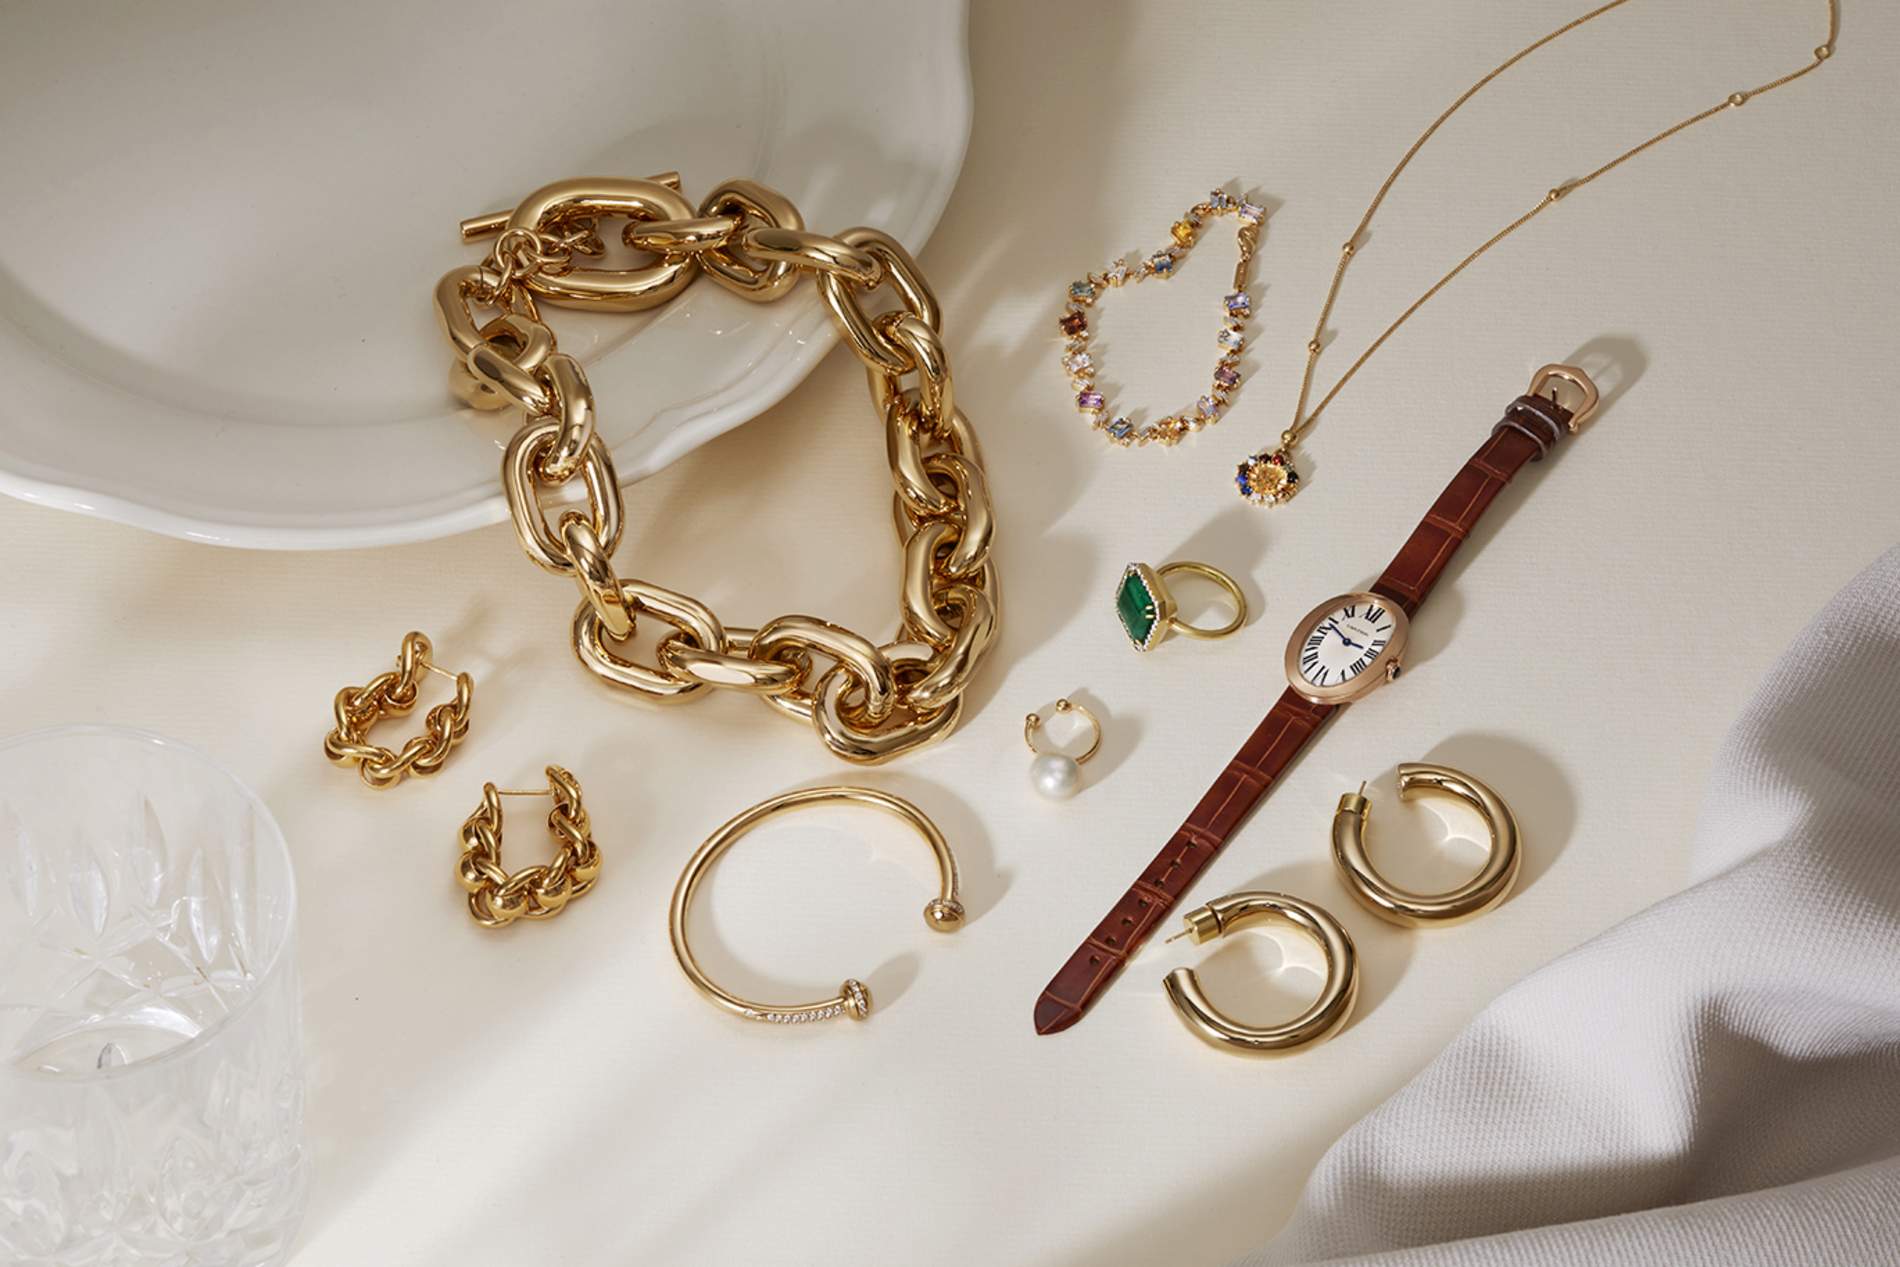 Classic Jewelry Essentials Every Wardrobe Needs